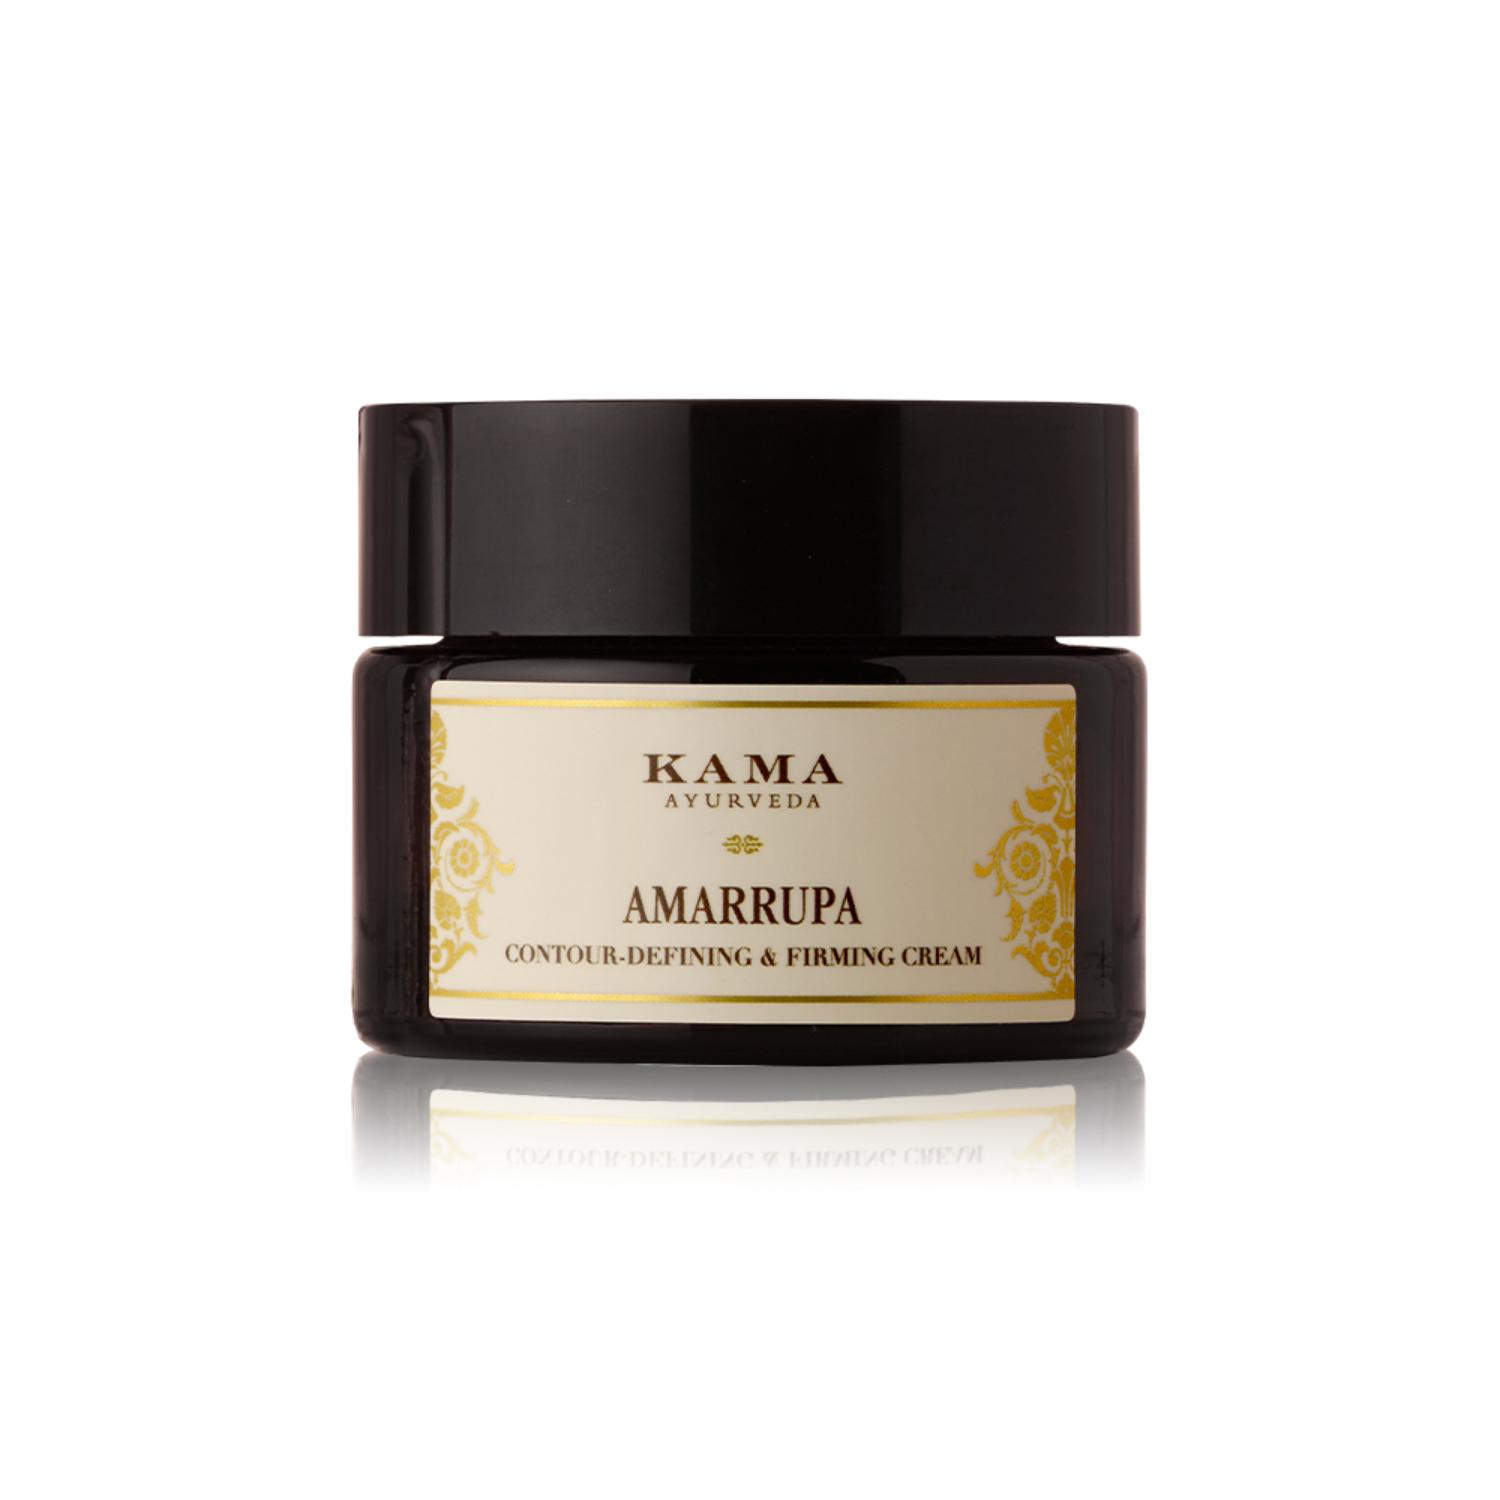 Kama Ayurveda | Kama Ayurveda Amarrupa Contour-Defining and Firming Cream (50 g)